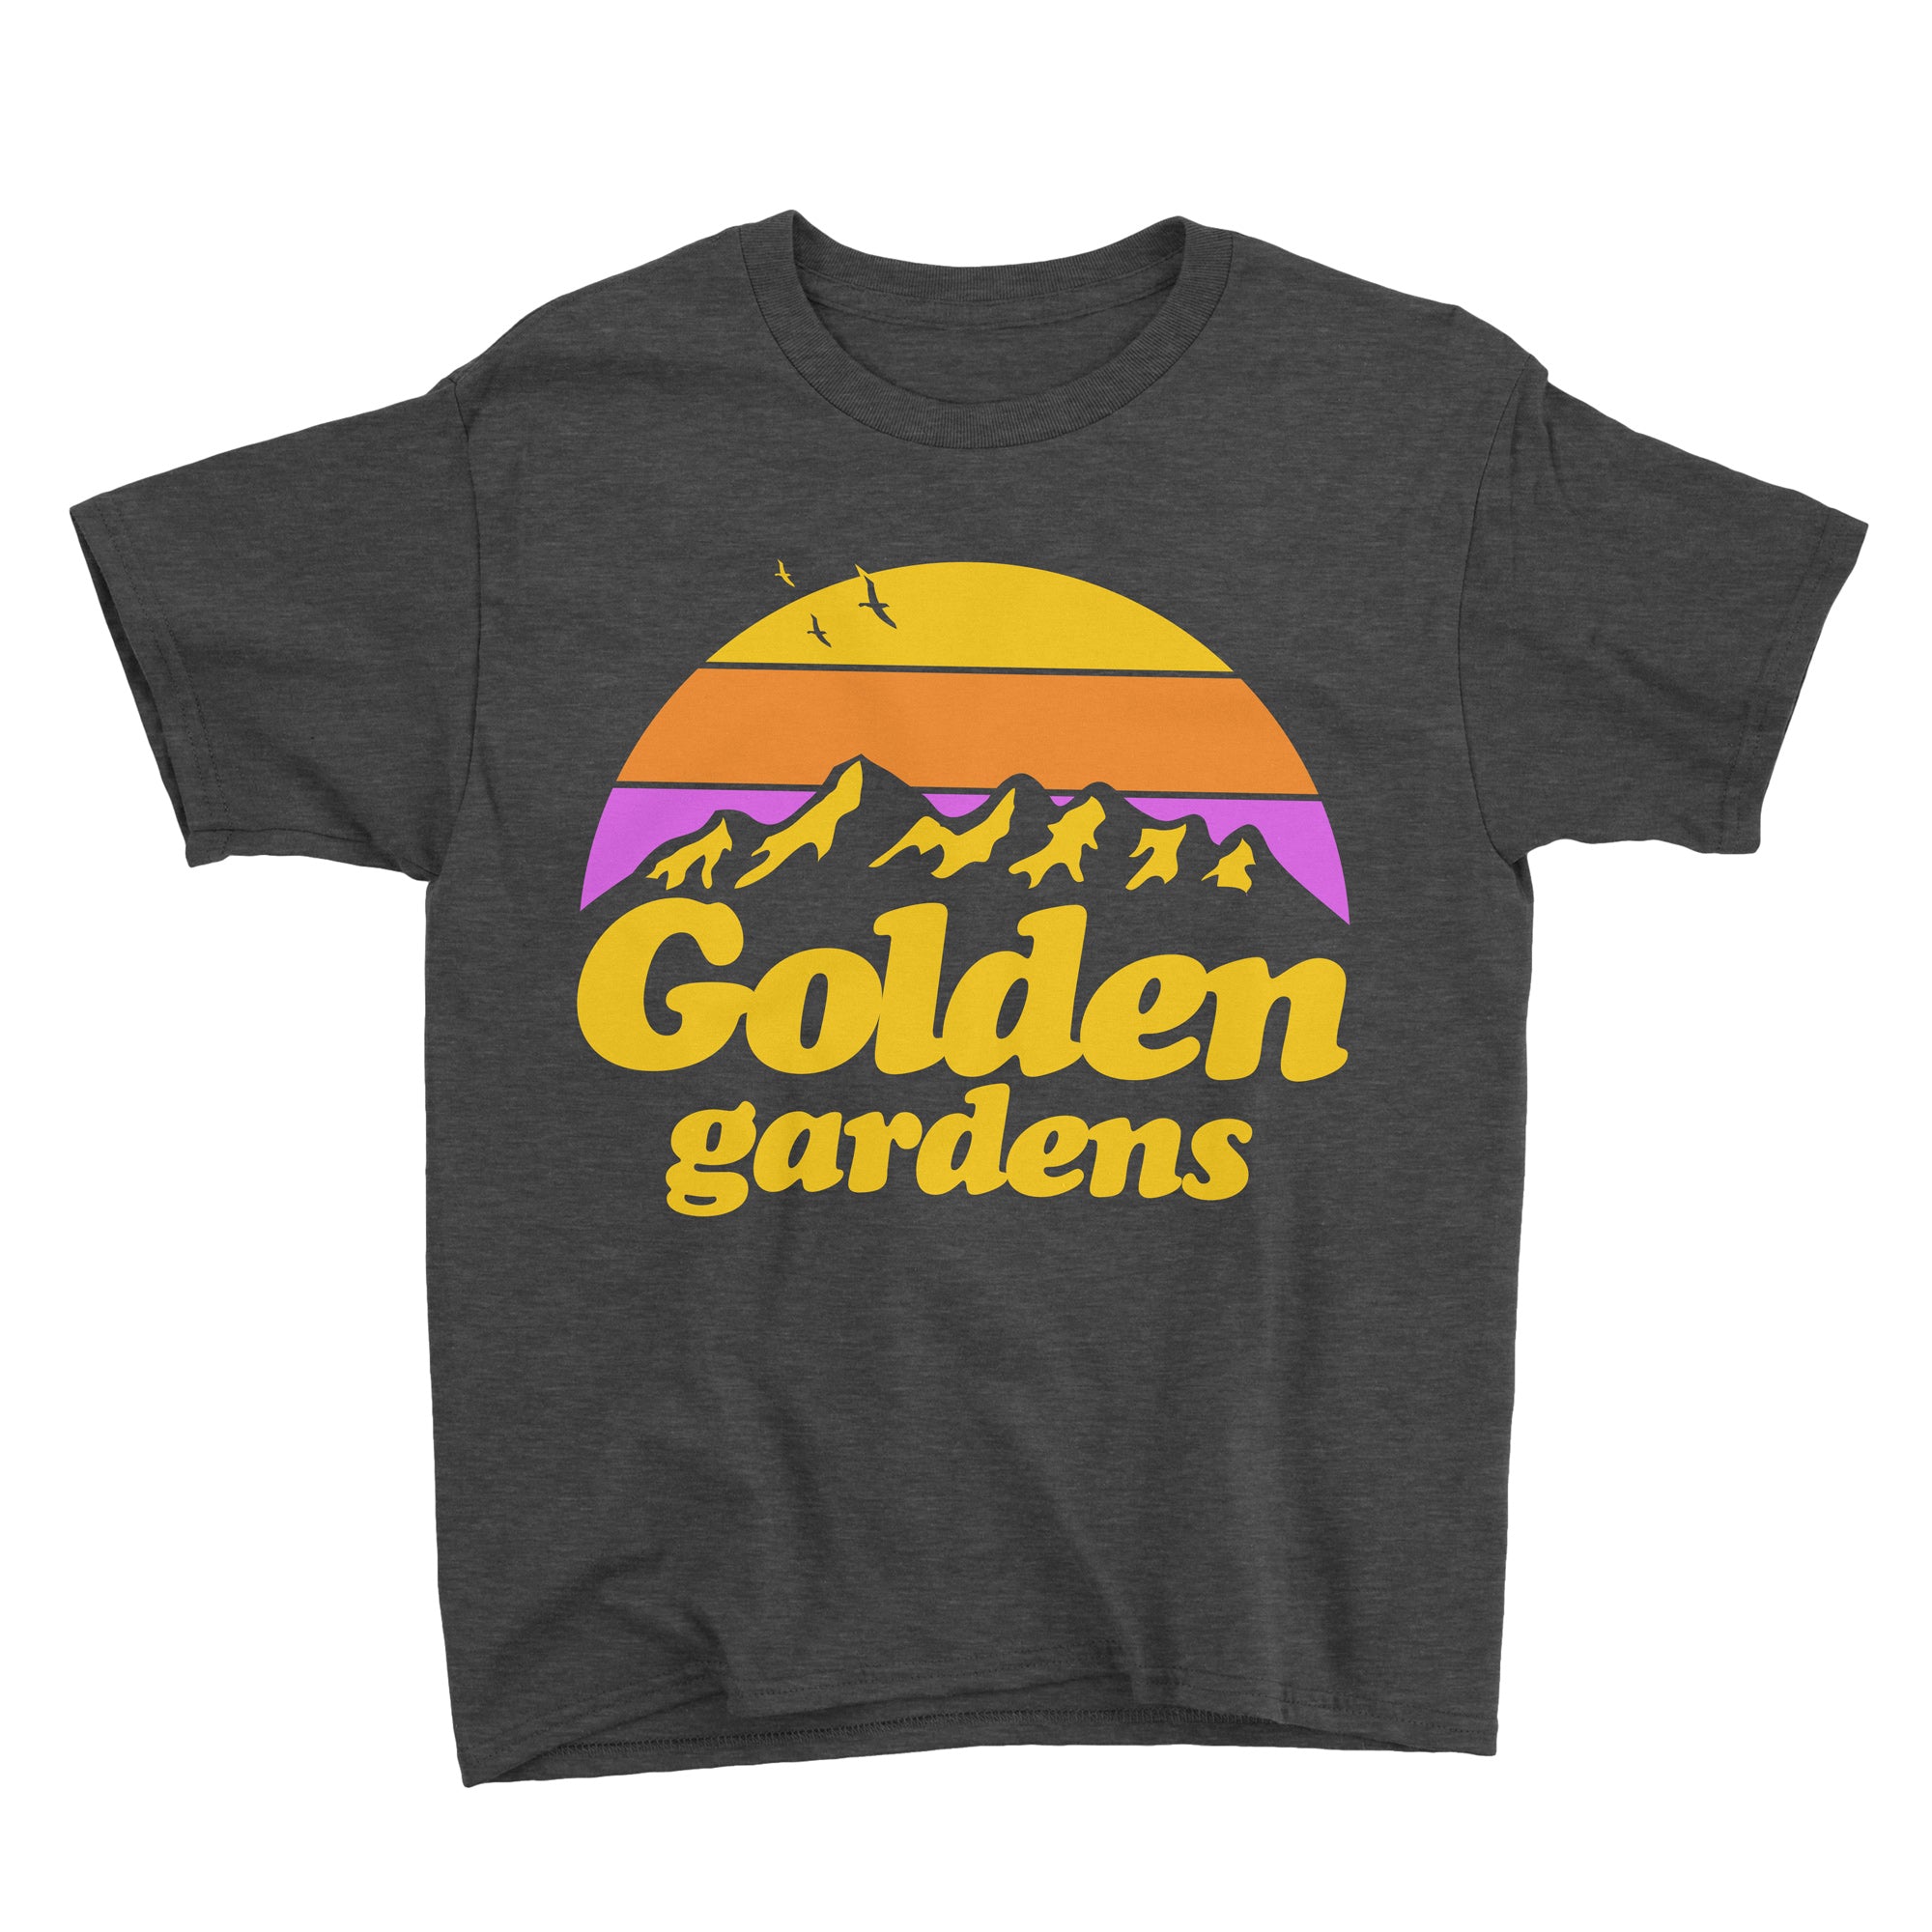 Golden Gardens Youth Tee - Viaduct